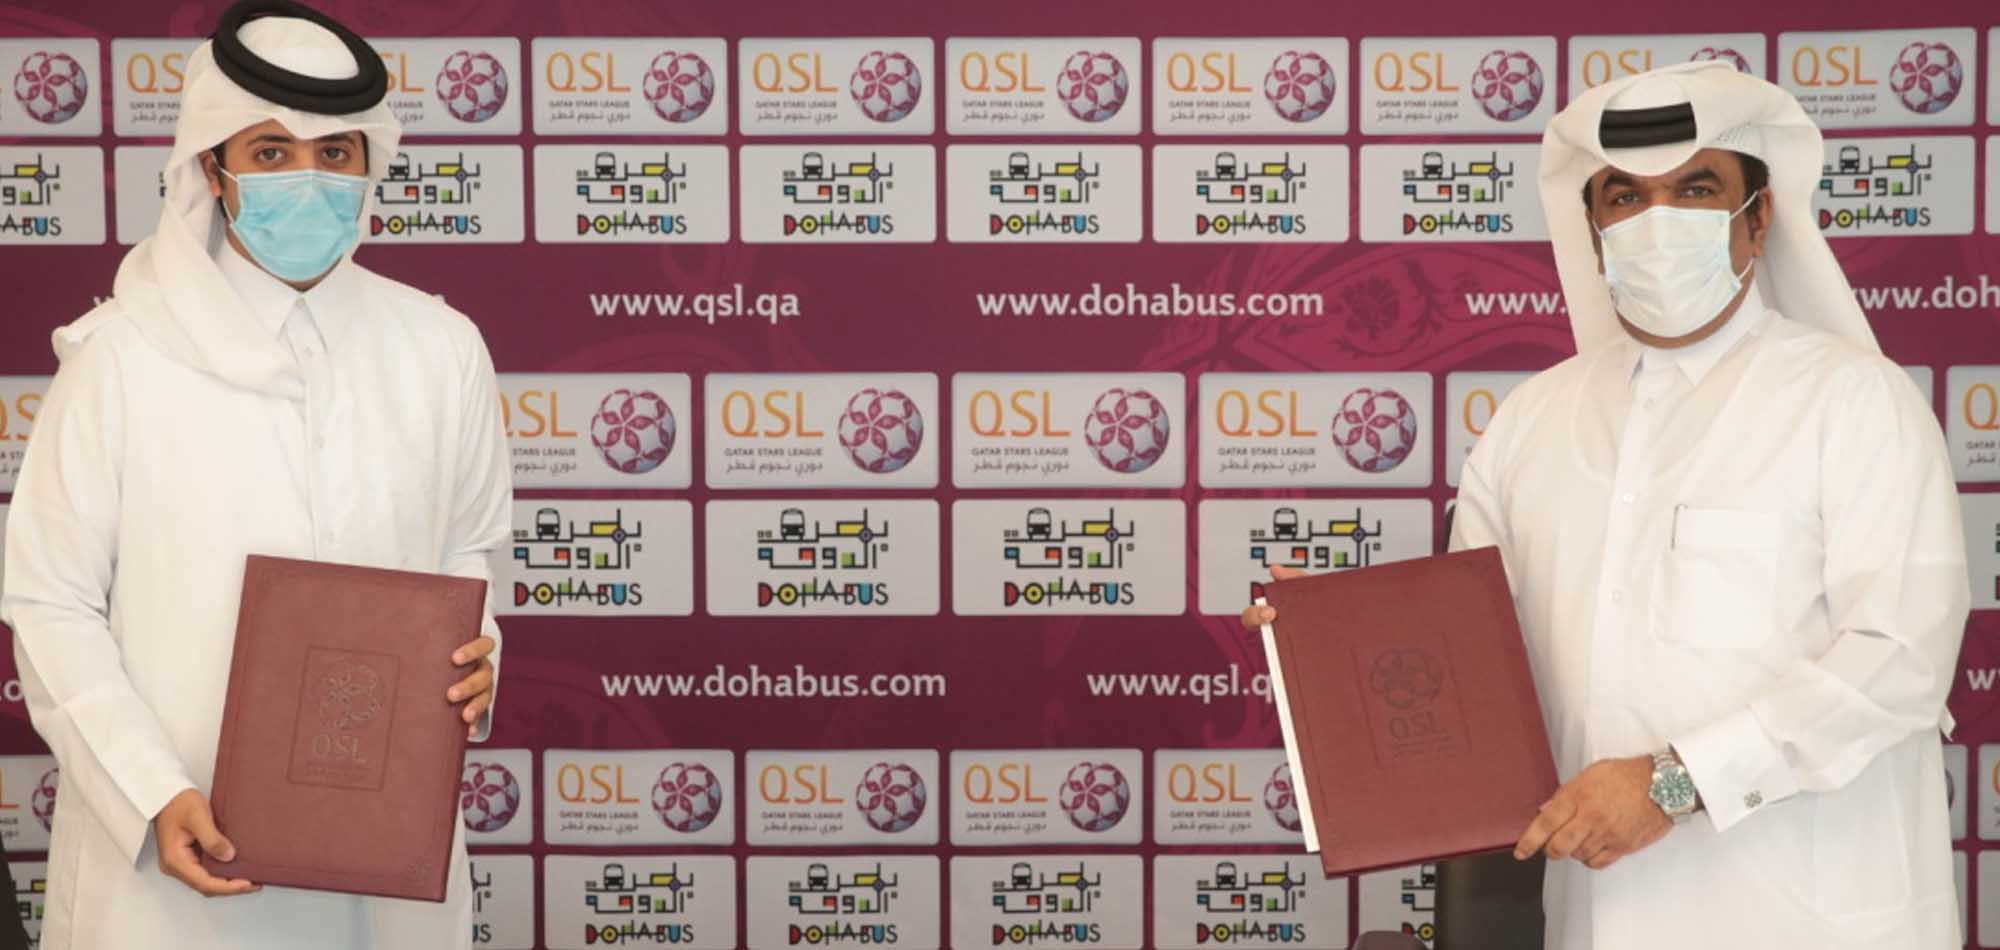 Qatar Stars League signs sponsorship agreement with Doha Bus company